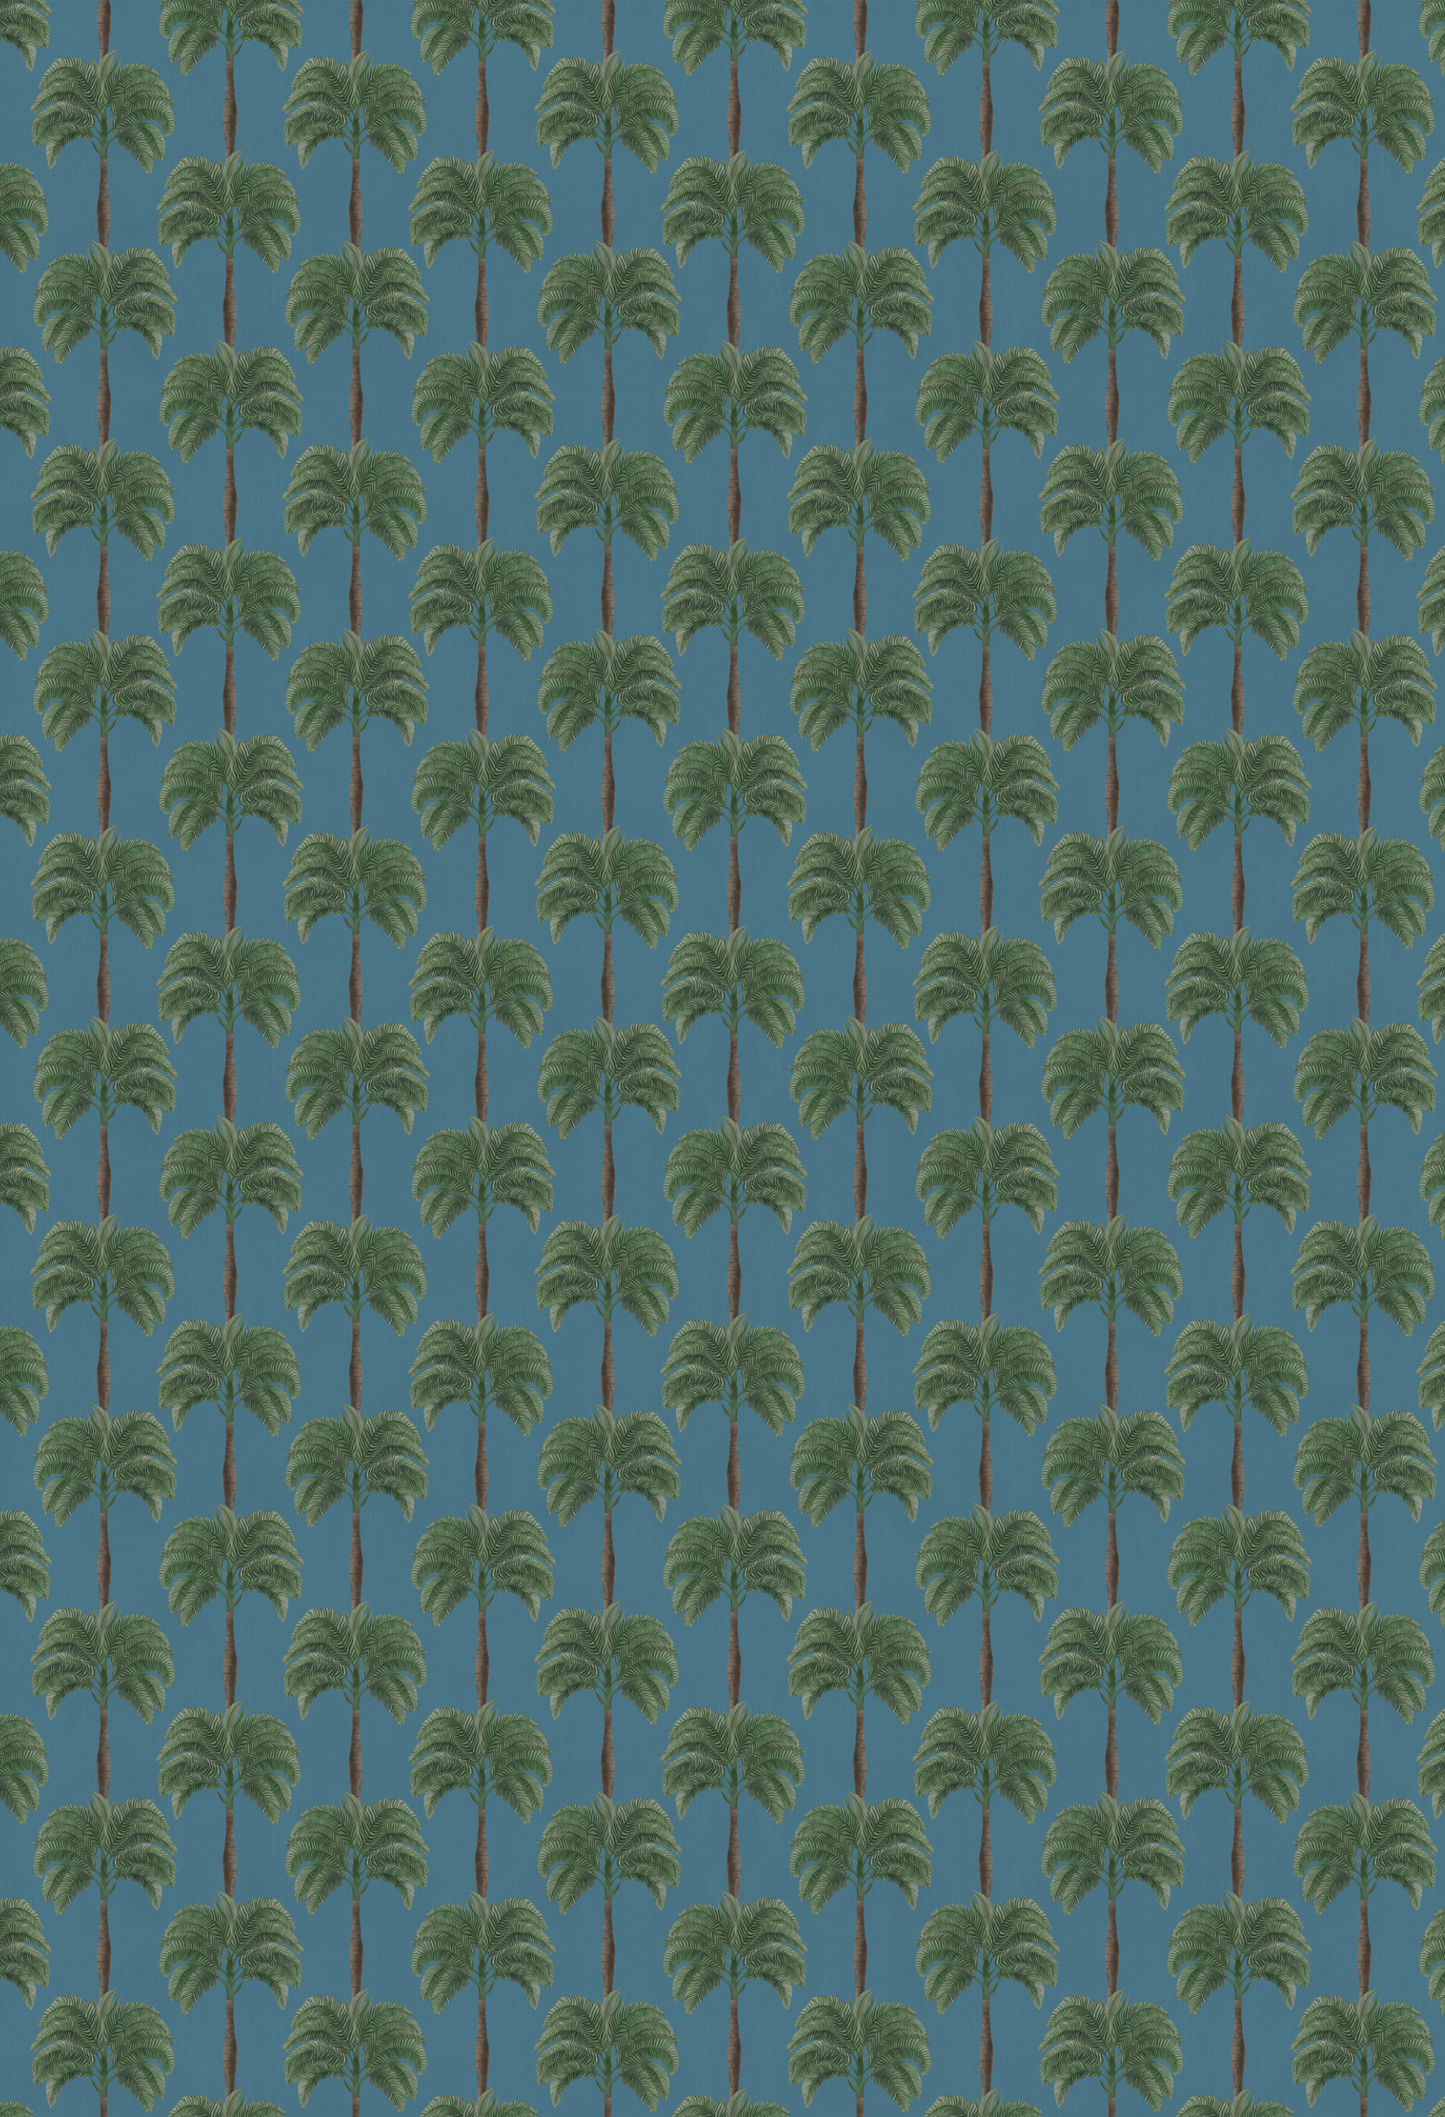 Little Palma Patterned Wallpaper on blue background by Deus ex Gardenia.